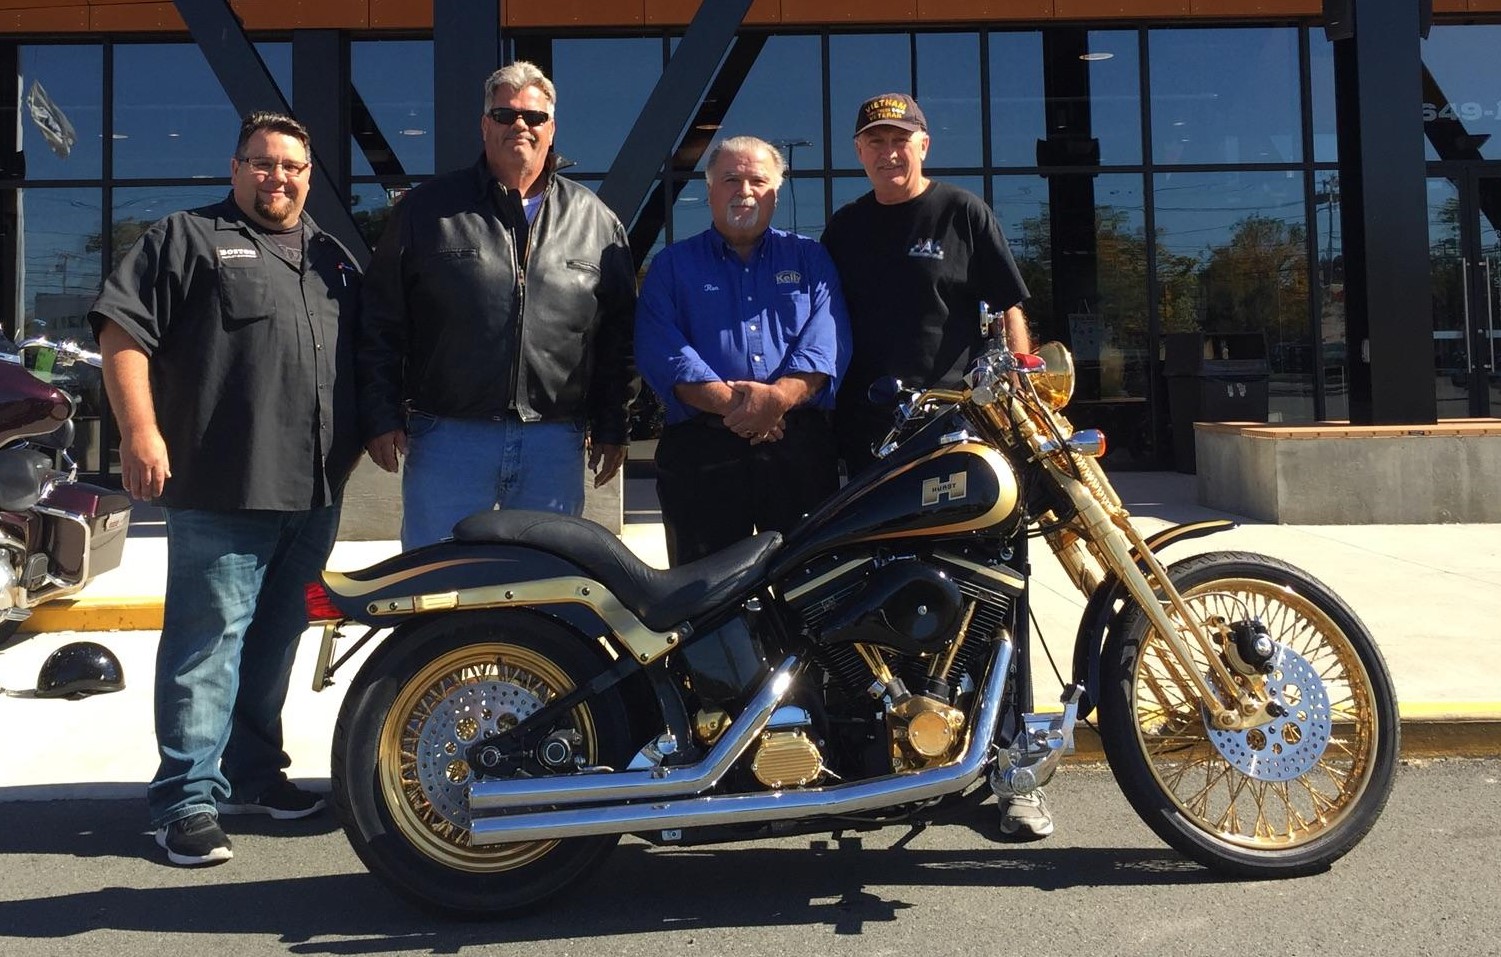 Veterans Assisting Veterans Raises $15K Through Generous Donation of 24-Karat Gold Motorcycle